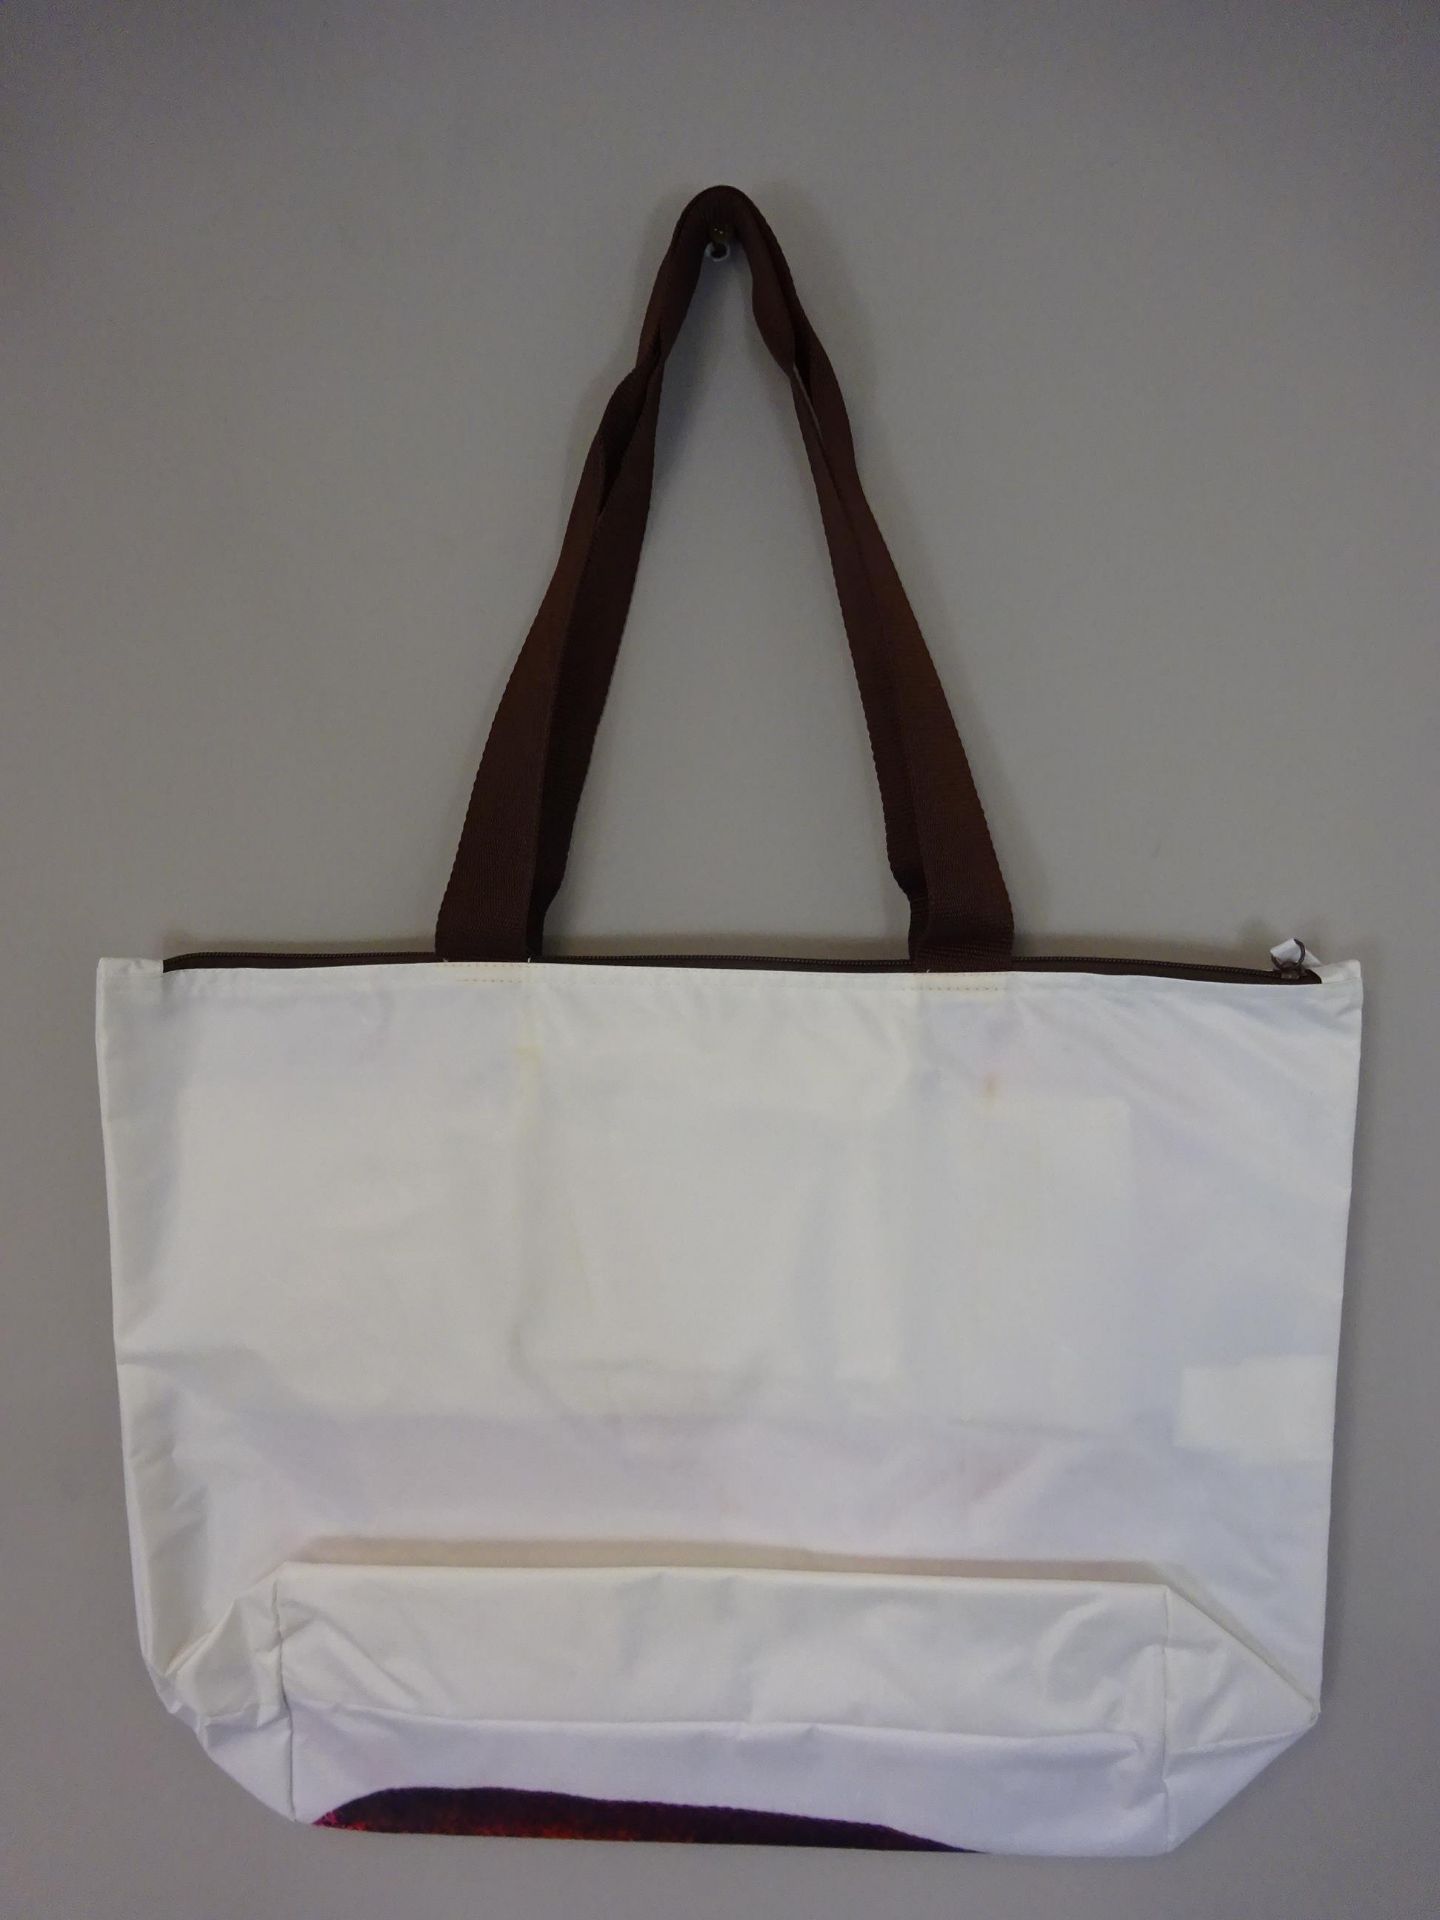 New Red Bag Patterened Waterproof Bag - Image 2 of 2